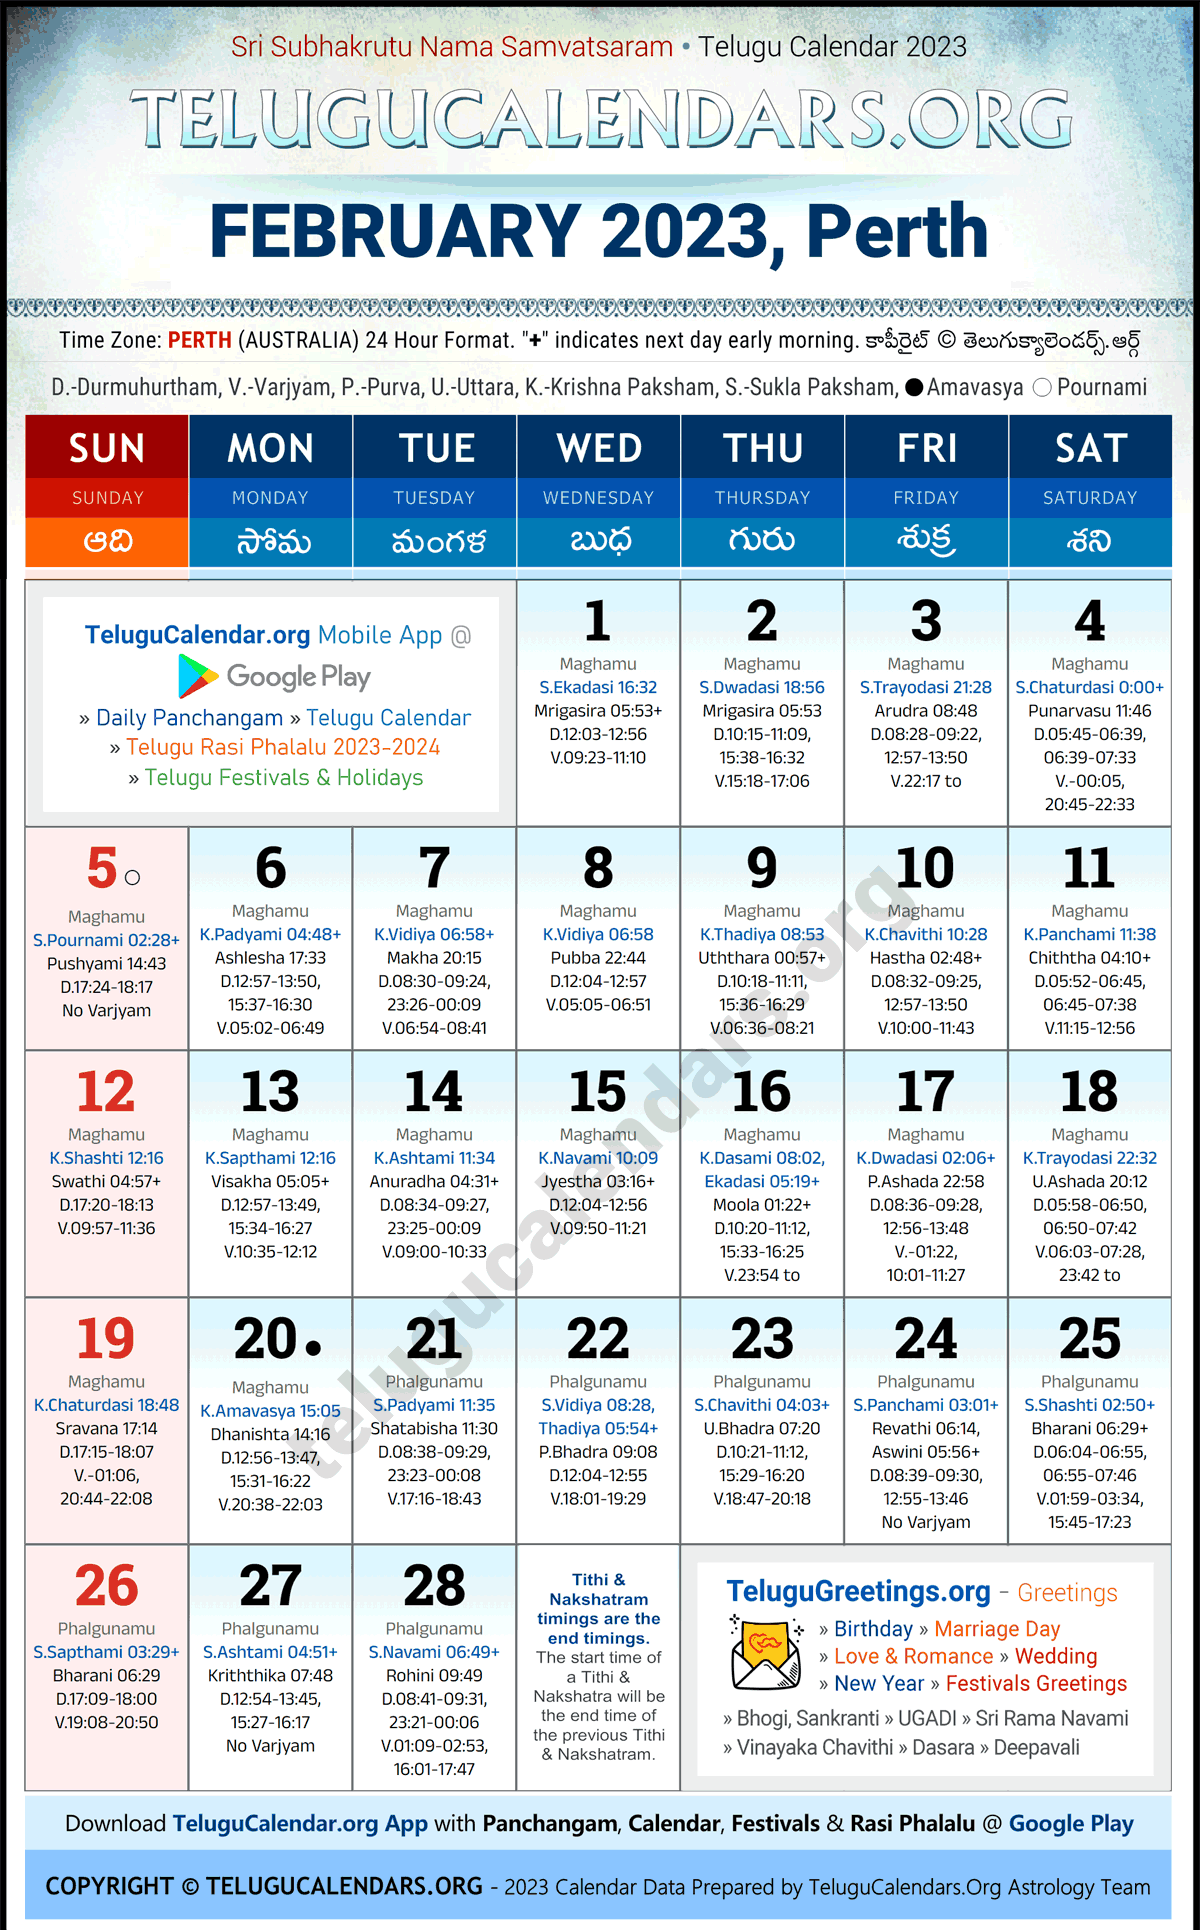 Telugu Calendar 2023 February Festivals for Perth